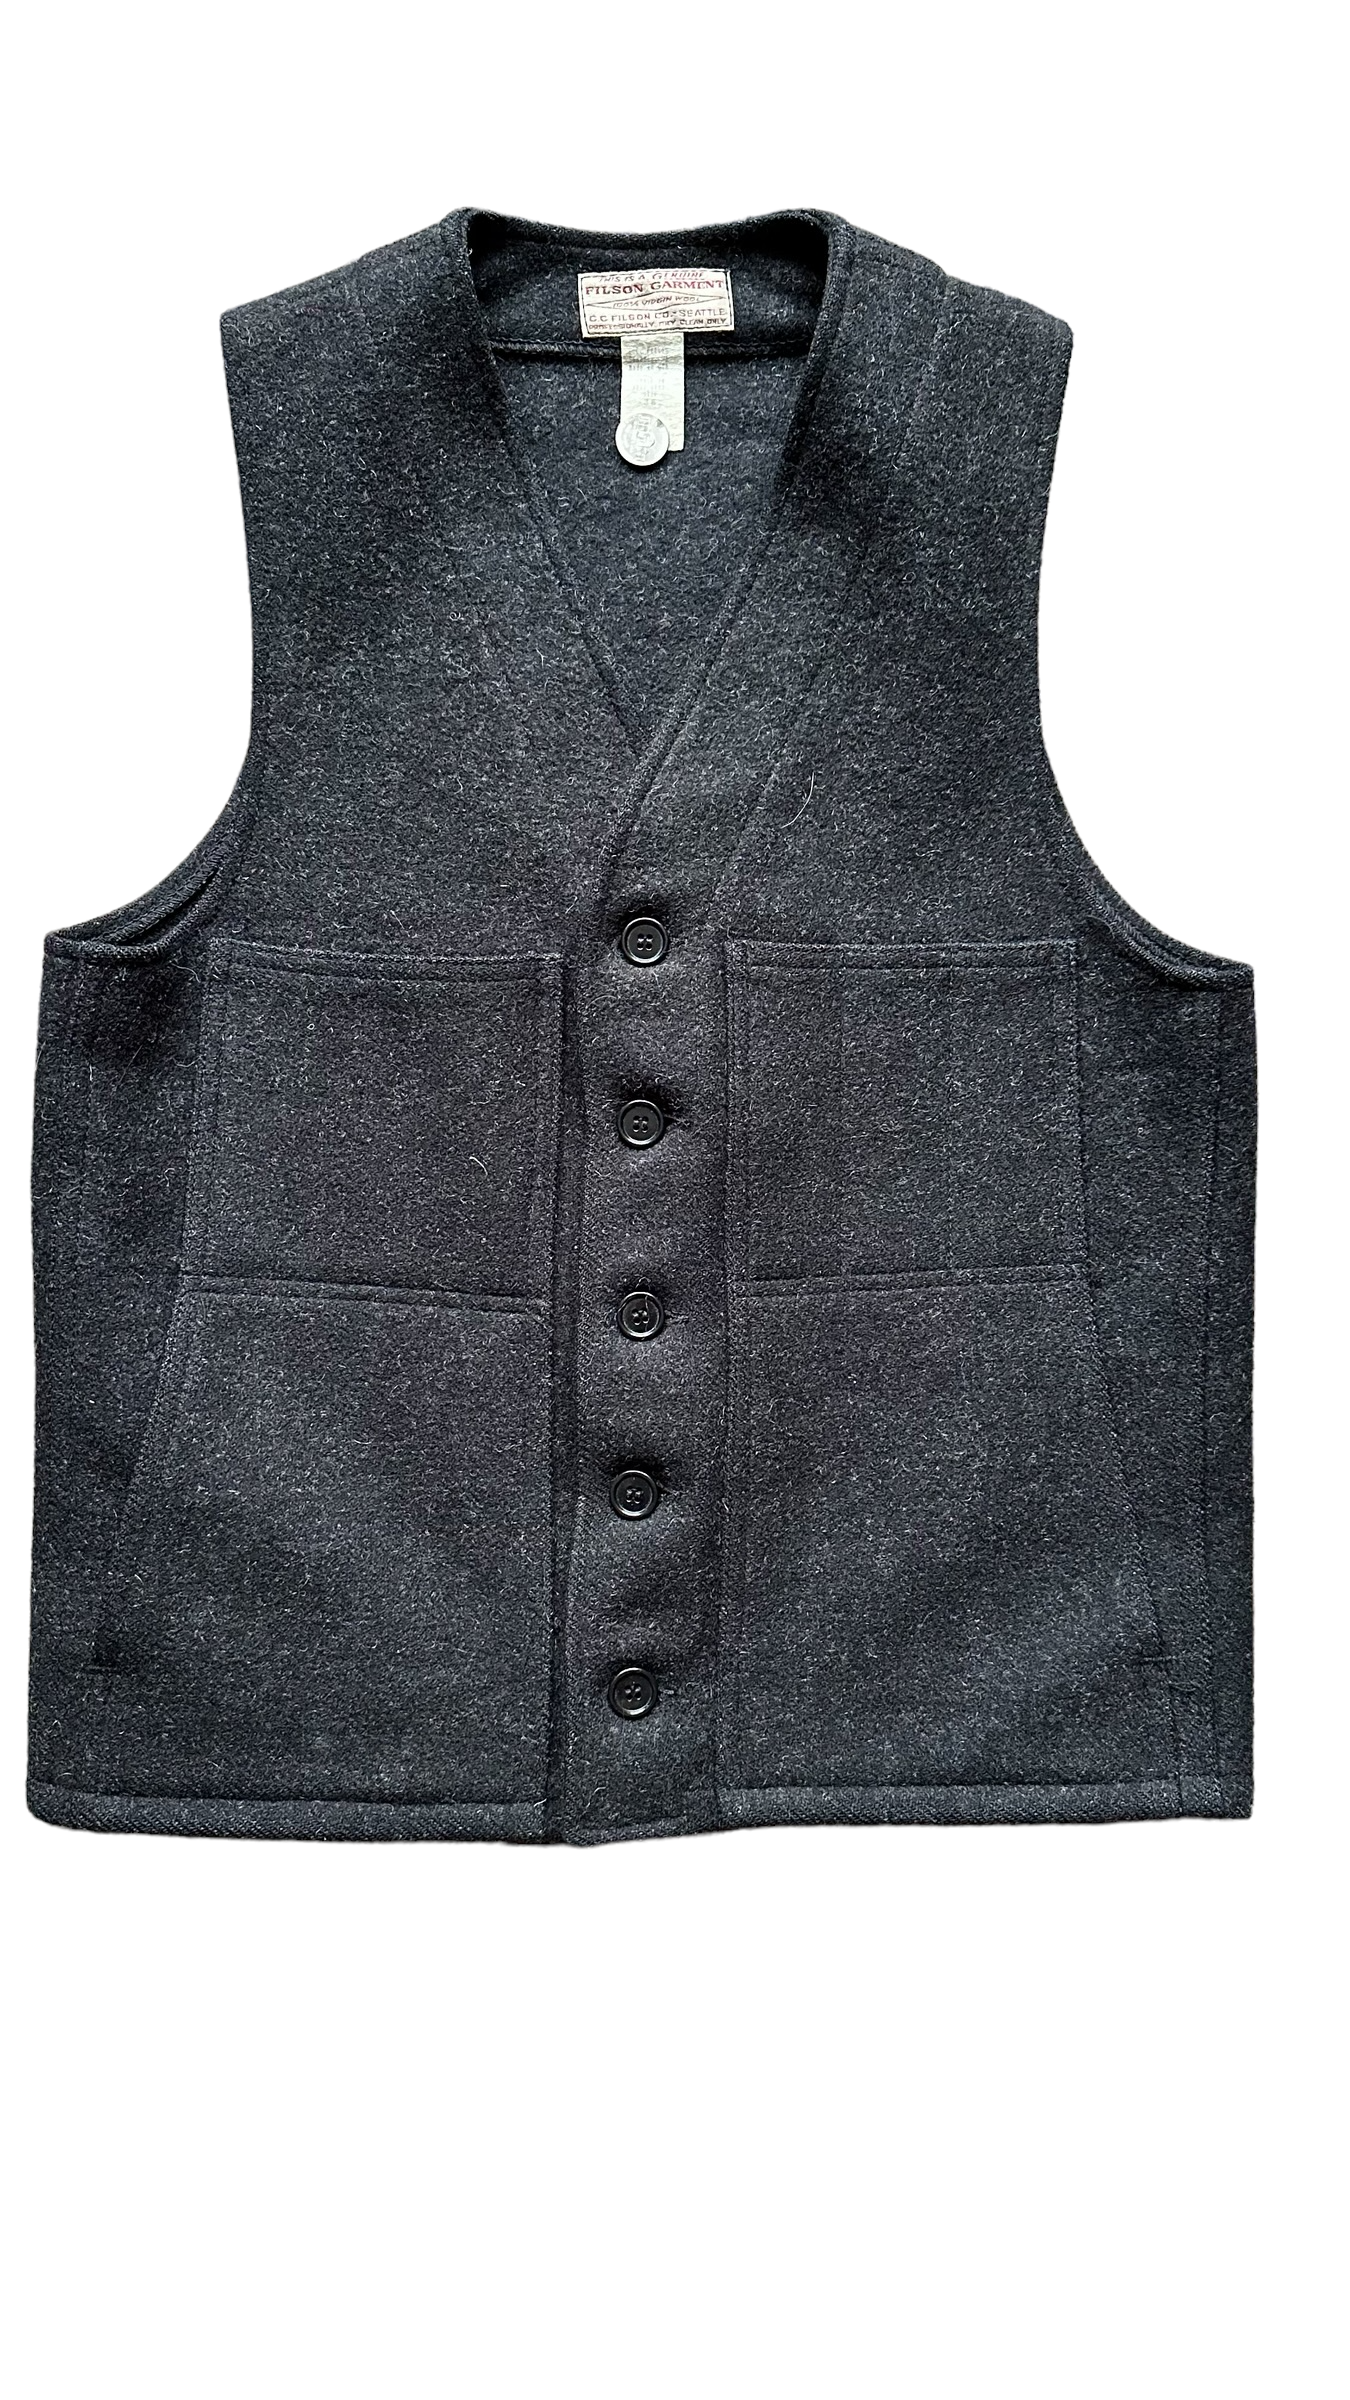 Front View of Vintage Filson Mackinaw Vest SZ 36 |  Charcoal Grey Wool Vest | Vintage Seattle Workwear